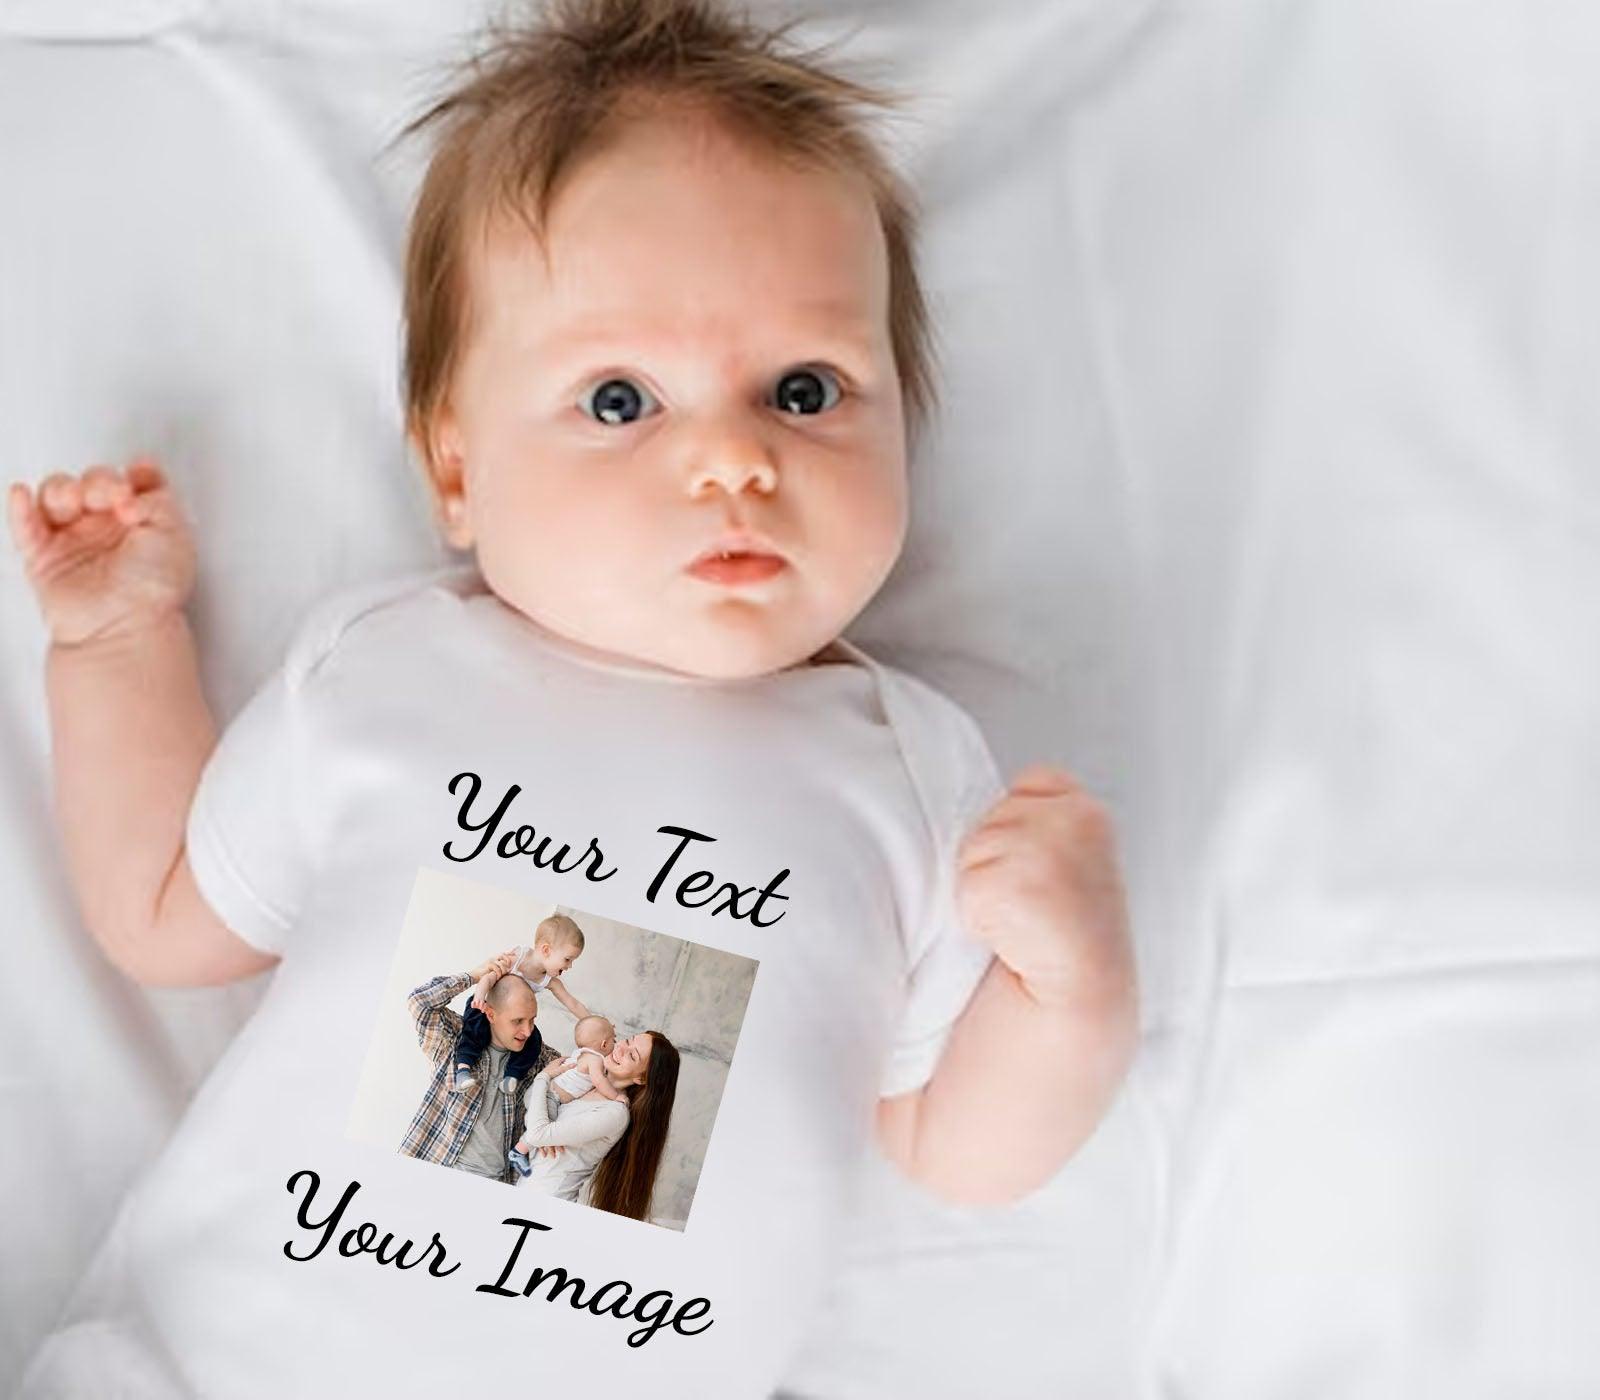 Short or Long Sleeve Baby Vest Image Upload - Smoochie